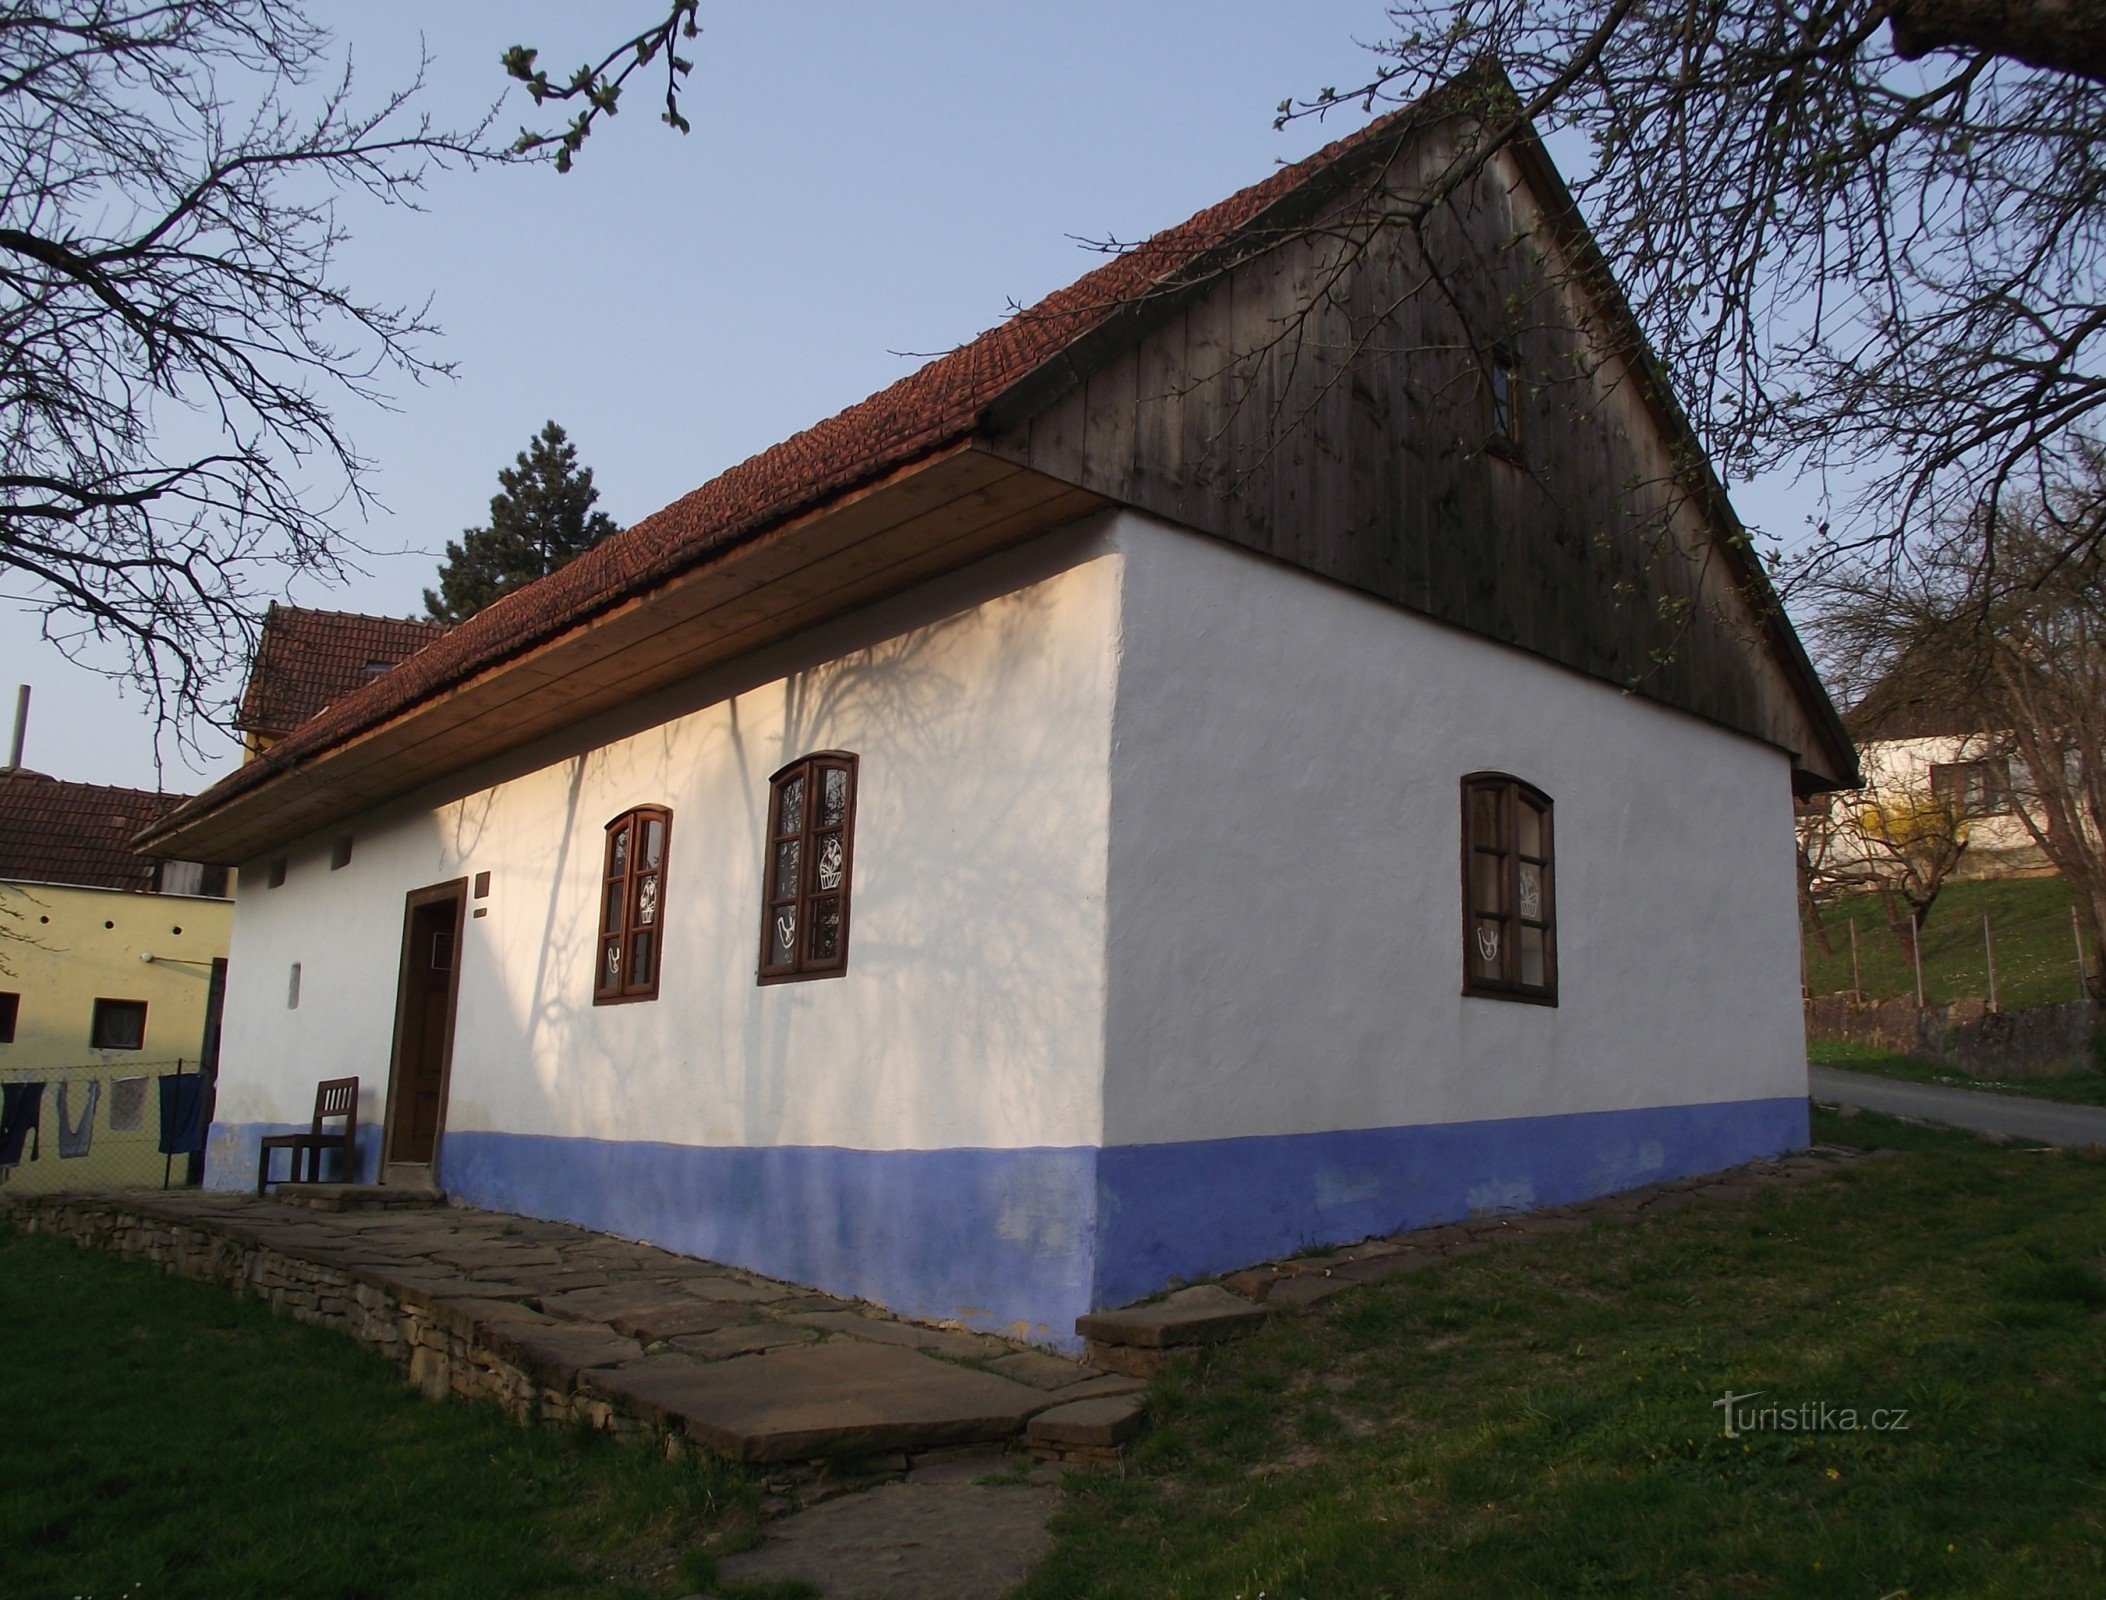 Komňa - το σπίτι του φύλακα του ζωολογικού κήπου